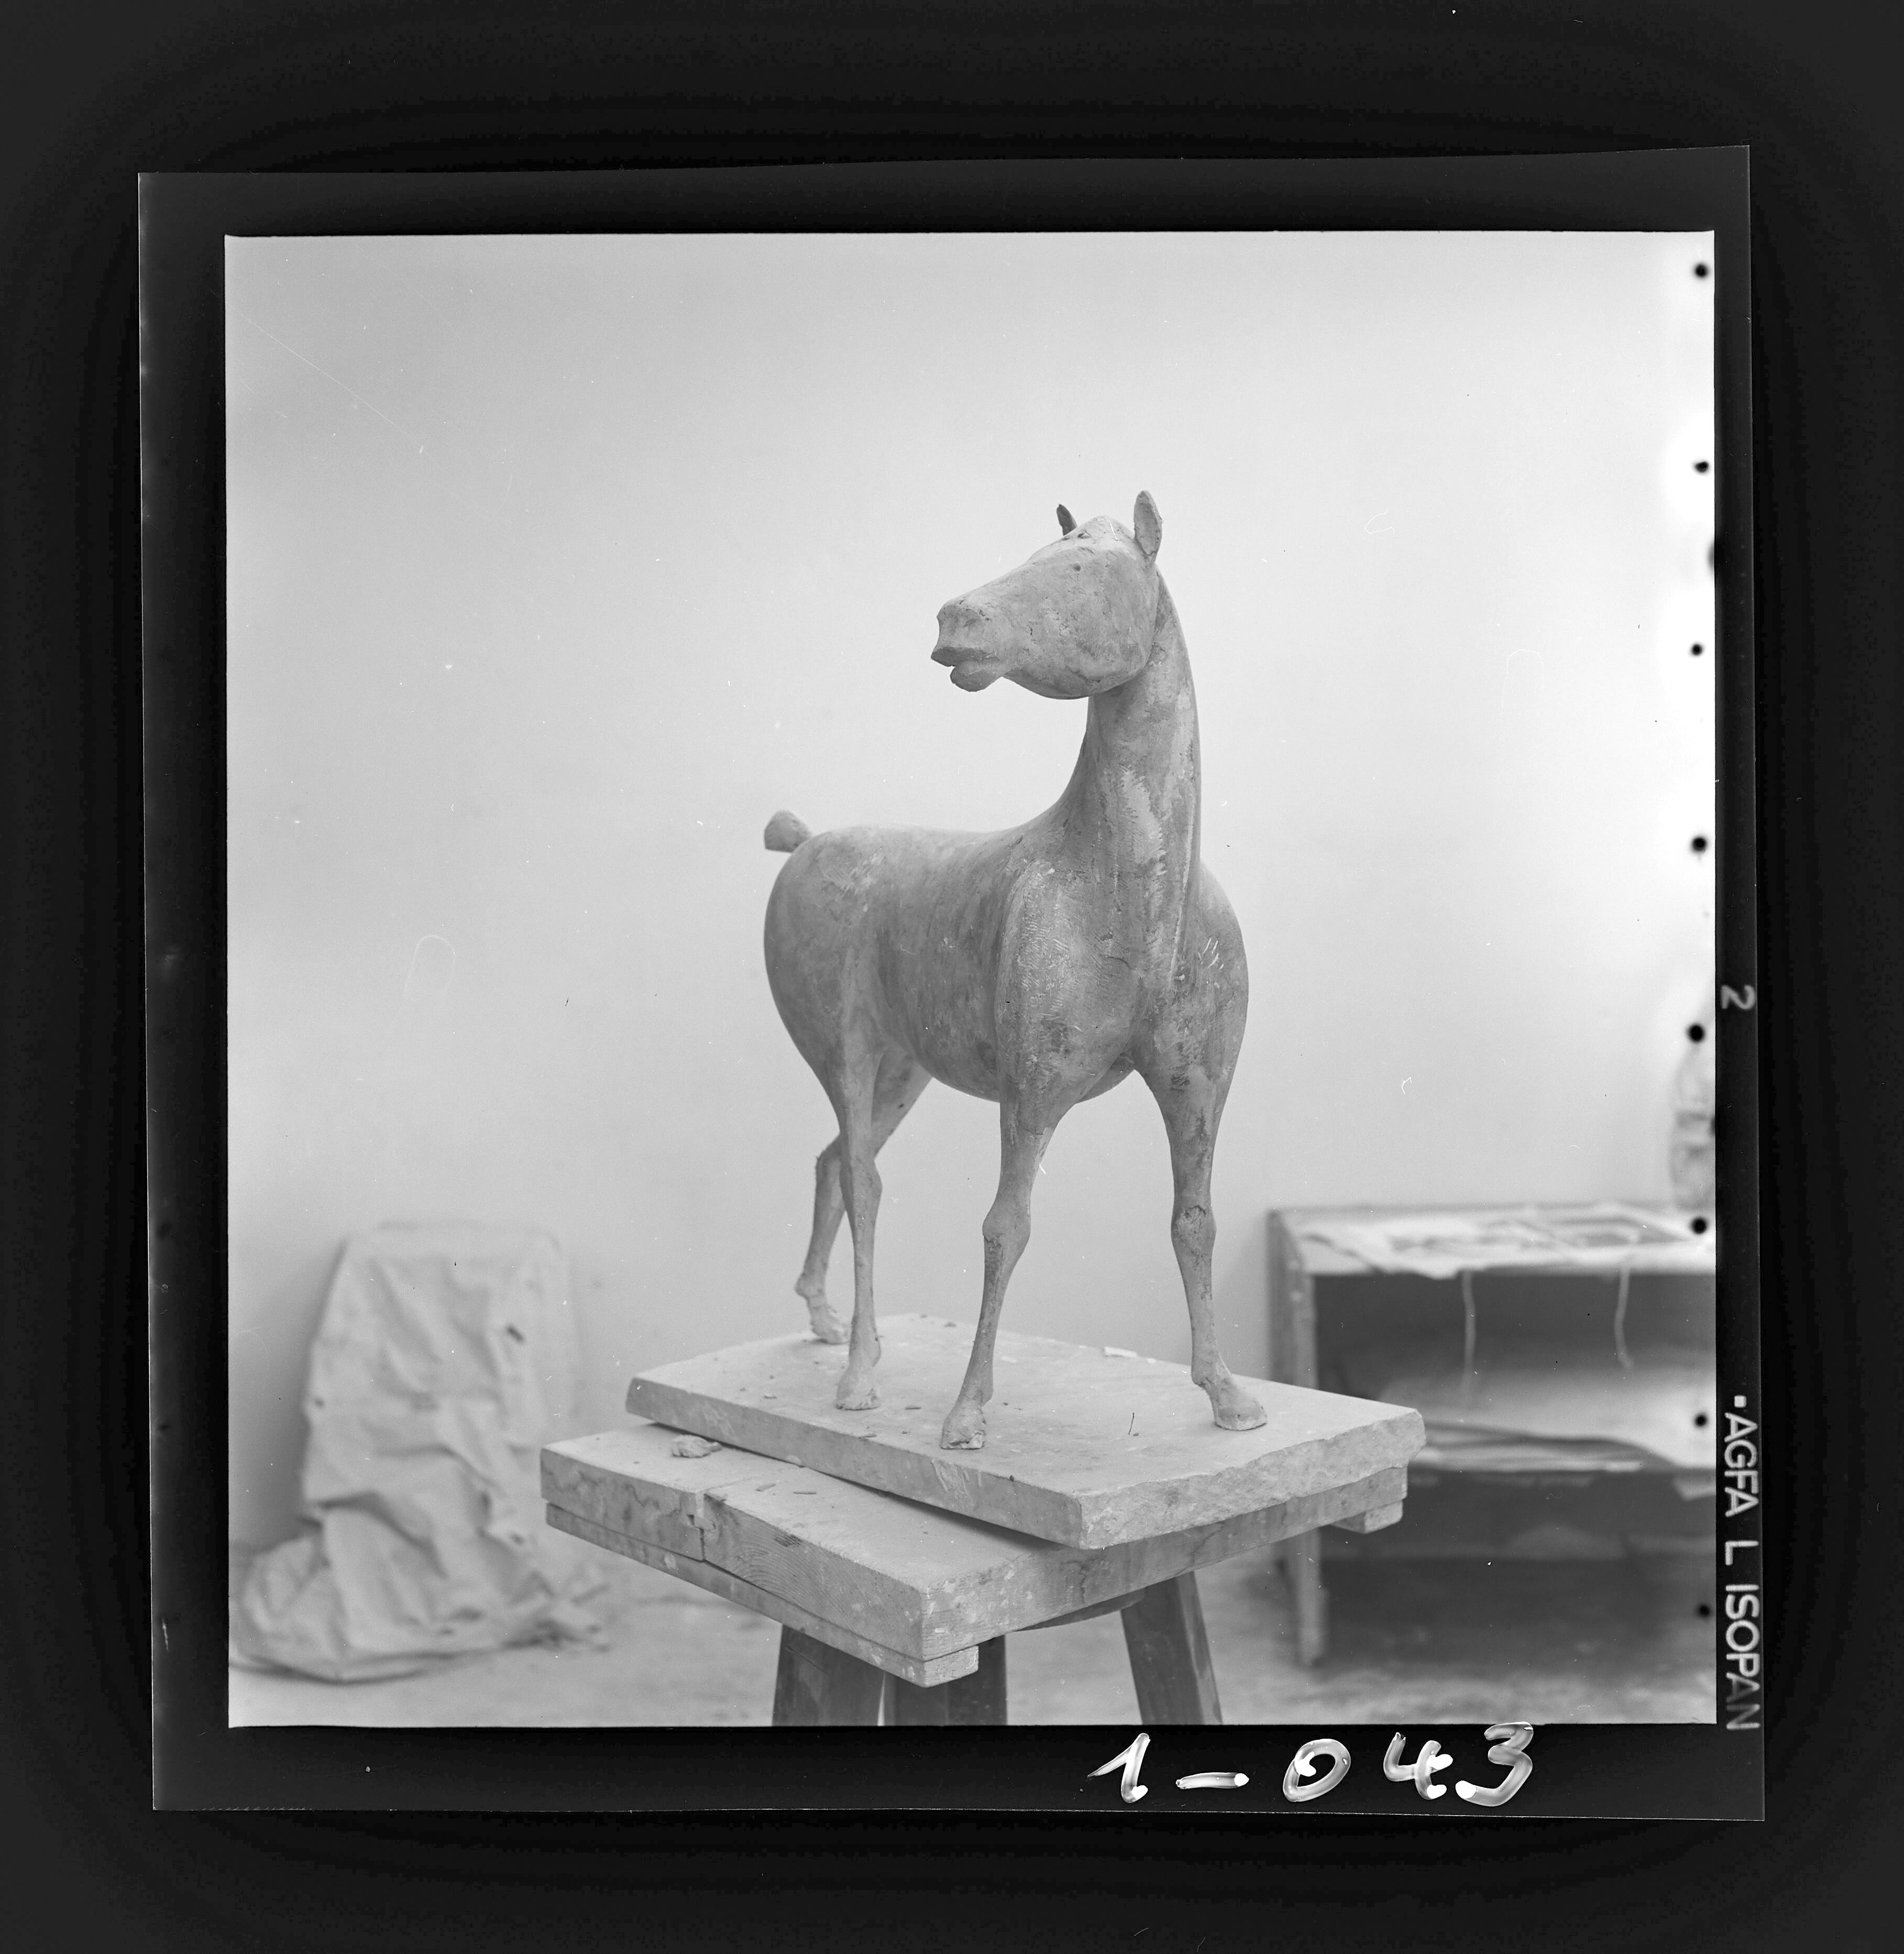 Fotografie Pferdeplastik von Joachim Dunkel (1925-2002) (Gerda Schimpf Fotoarchiv CC BY)